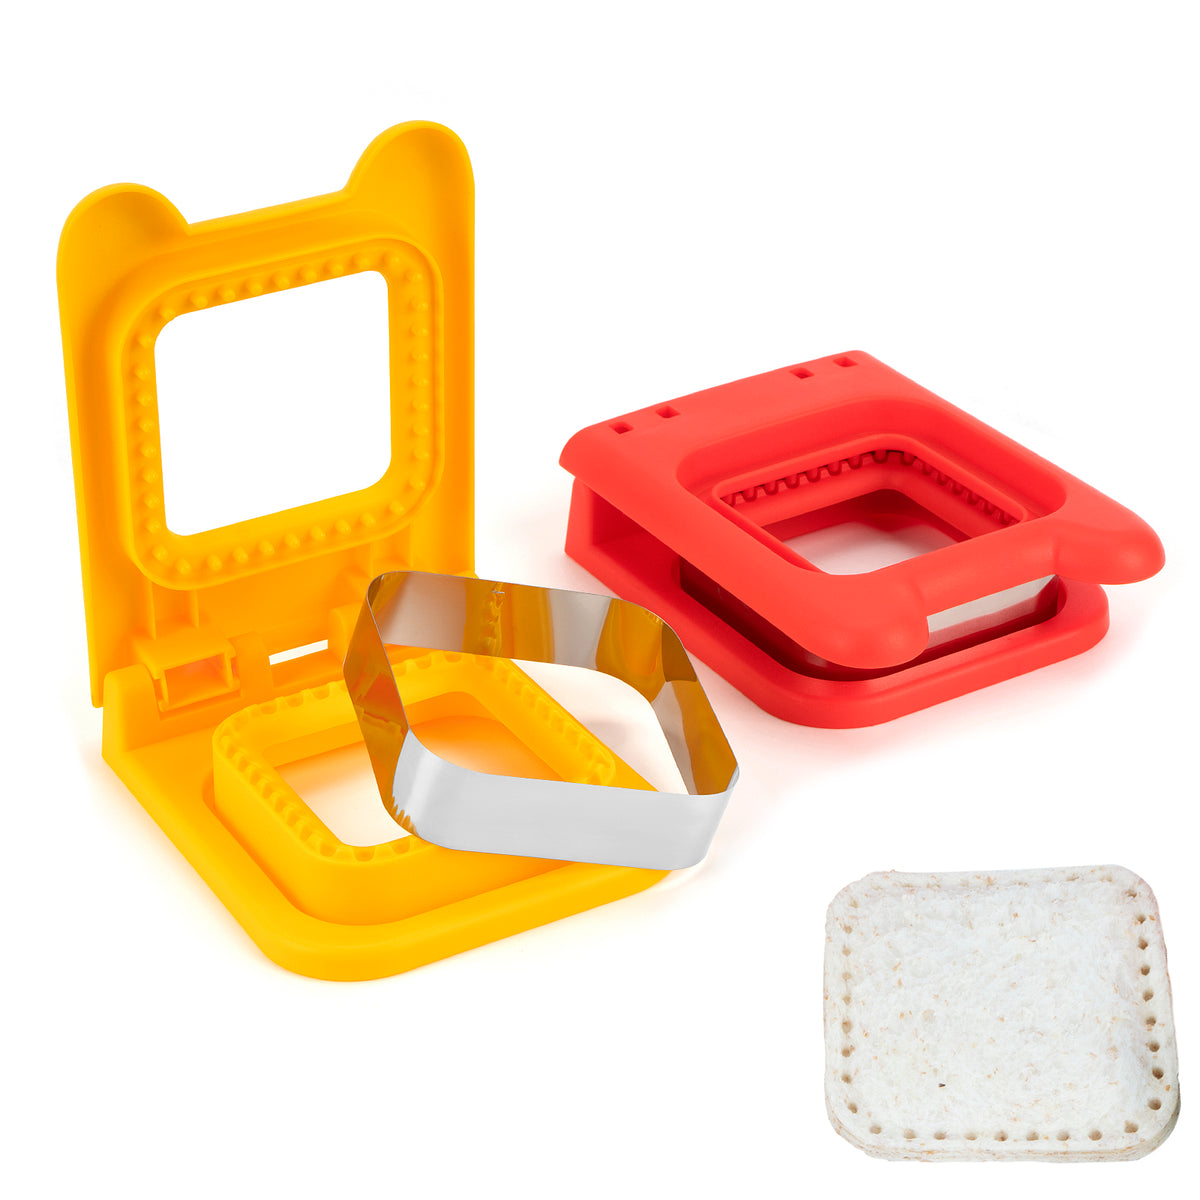 Adorila 2 Pack Sandwich Cutter and Sealer, DIY Decruster Sandwiches, Uncrustables Sandwich Maker for Kids Boys Girls Lunch Bento Box (Red, Yellow)